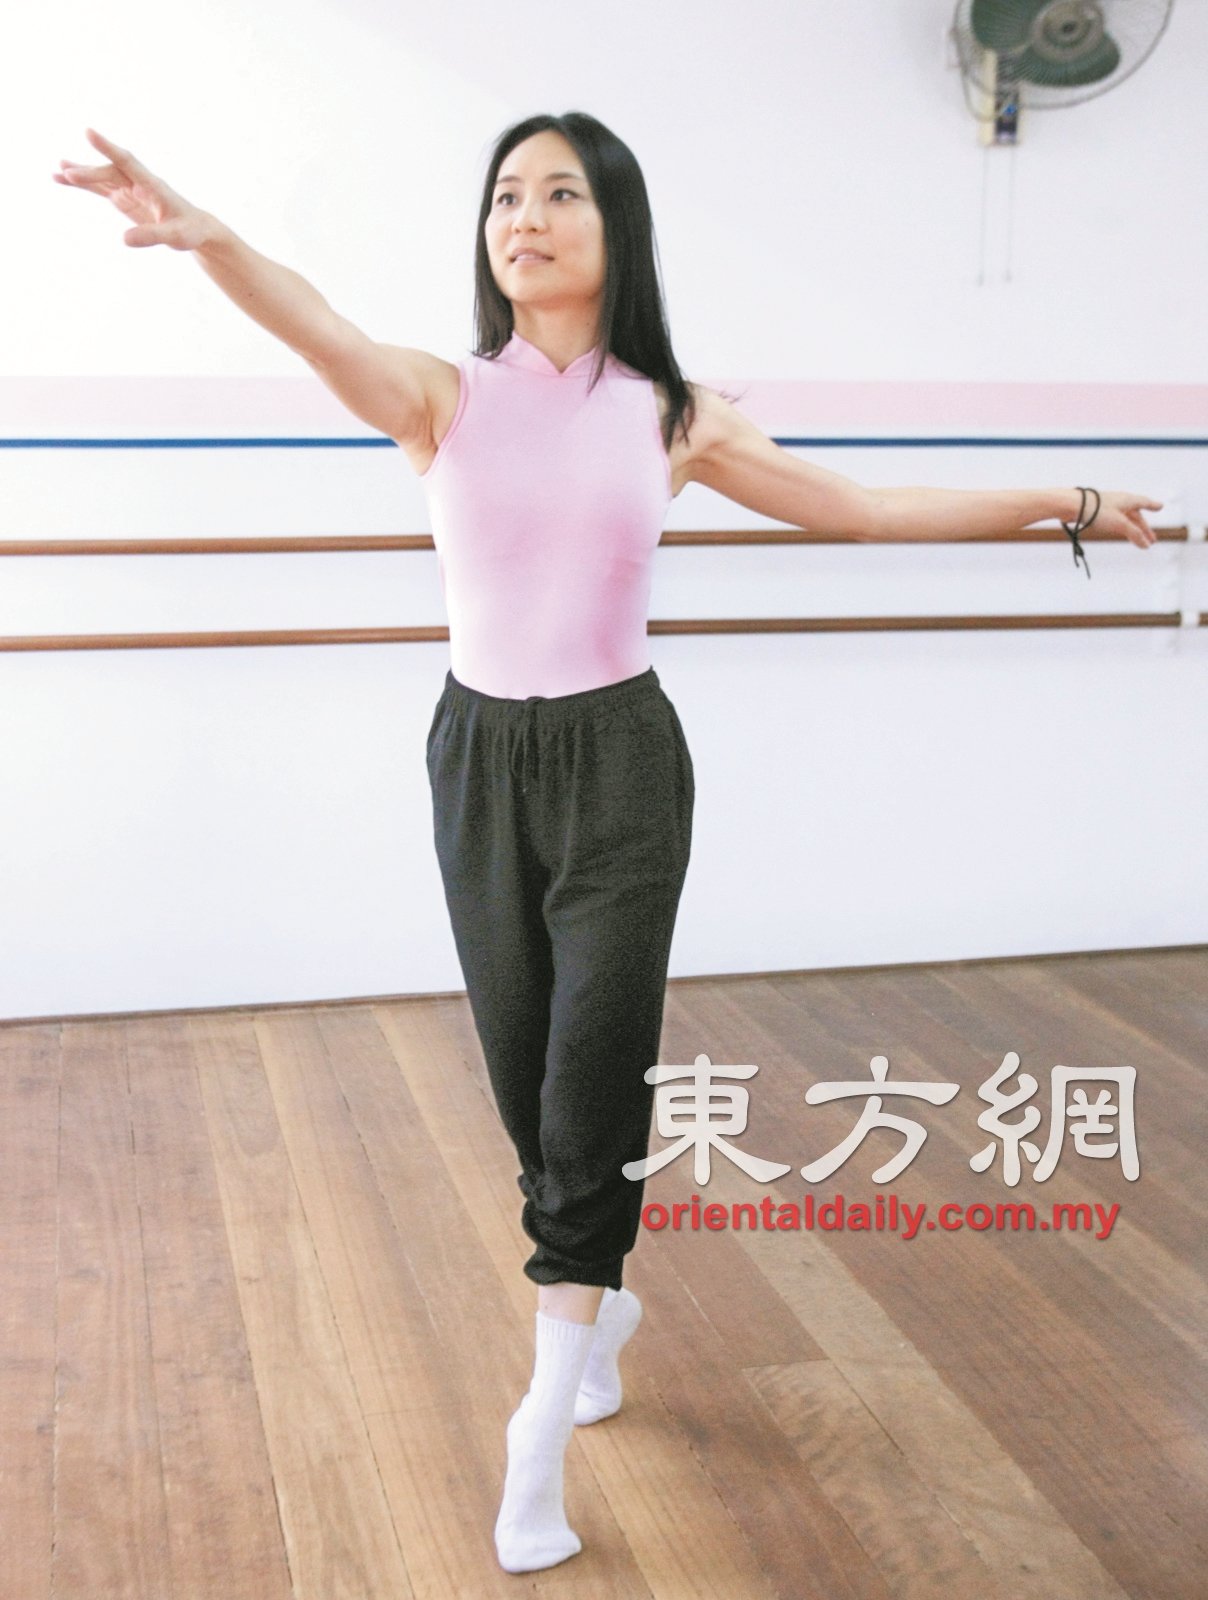 She Moves Me是郑娟清从今年2月开始筹备的舞蹈演出。她一手包办所有事项，对舞蹈的热忱却丝毫不减，“很累，但希望能一直做下去。”